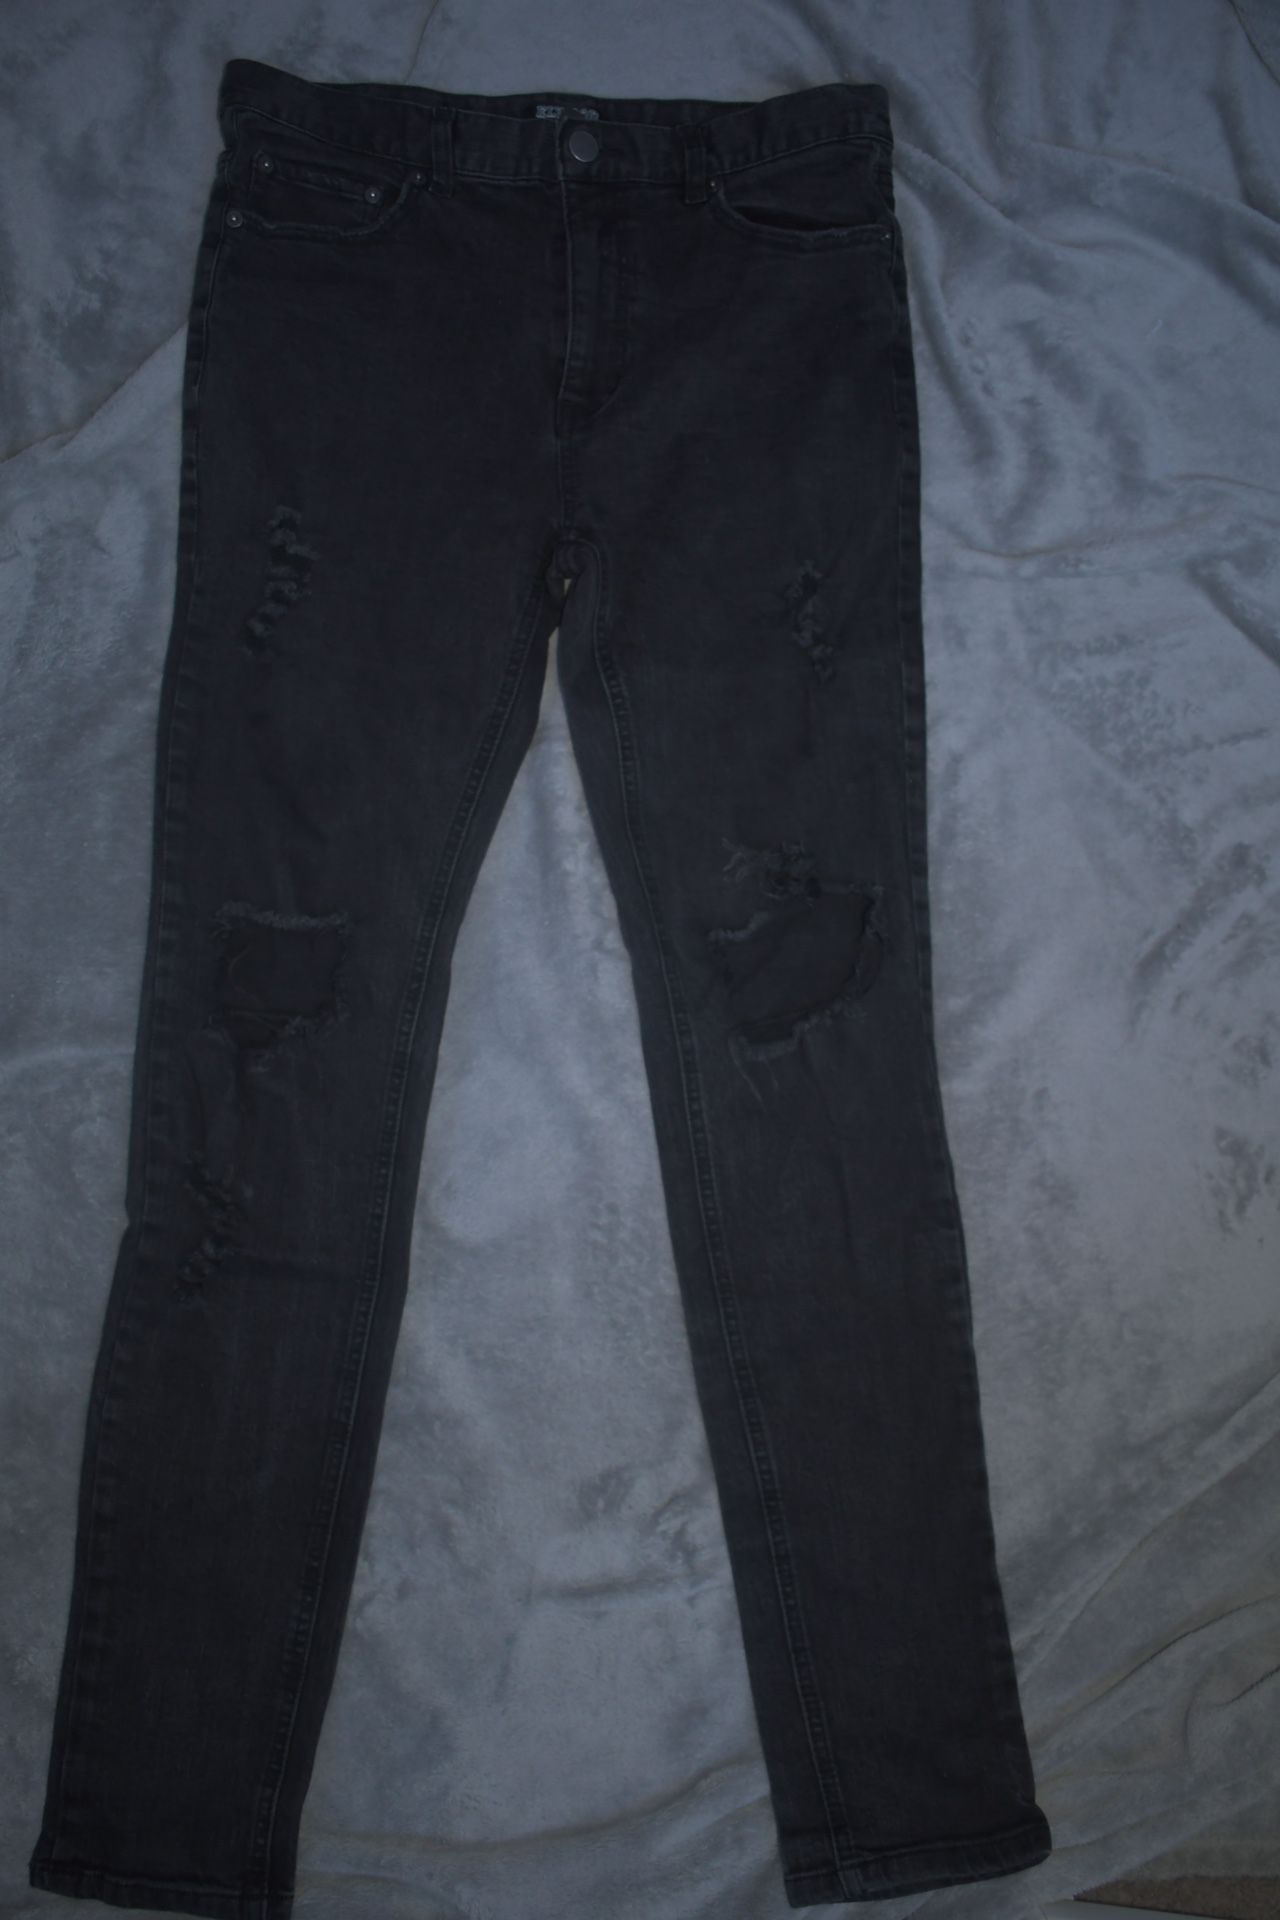 Elwood 30 X 30 Black Skinny Jeans 